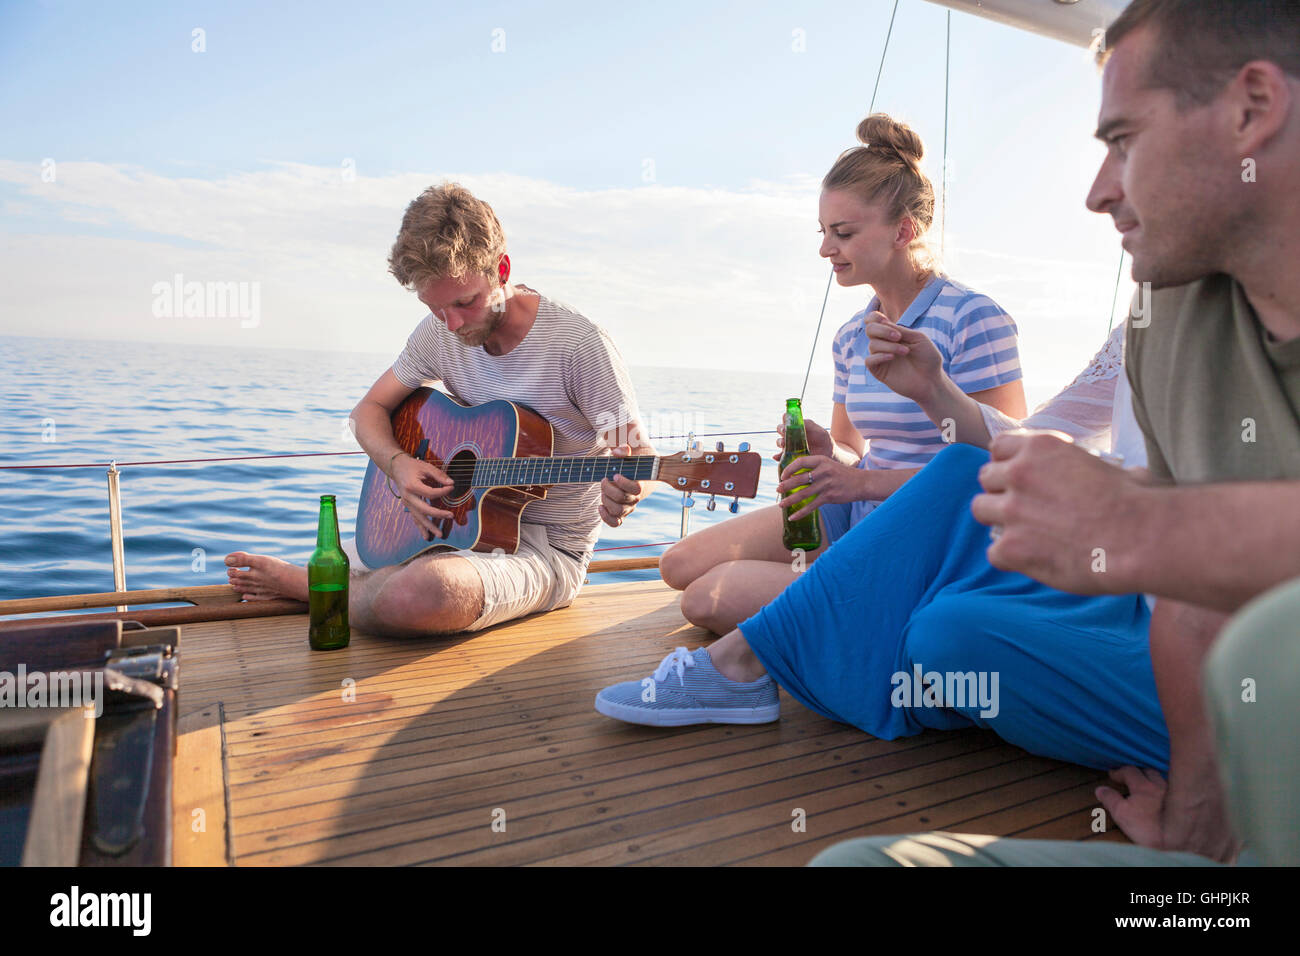 Young man playing guitar on sailboat Stock Photo